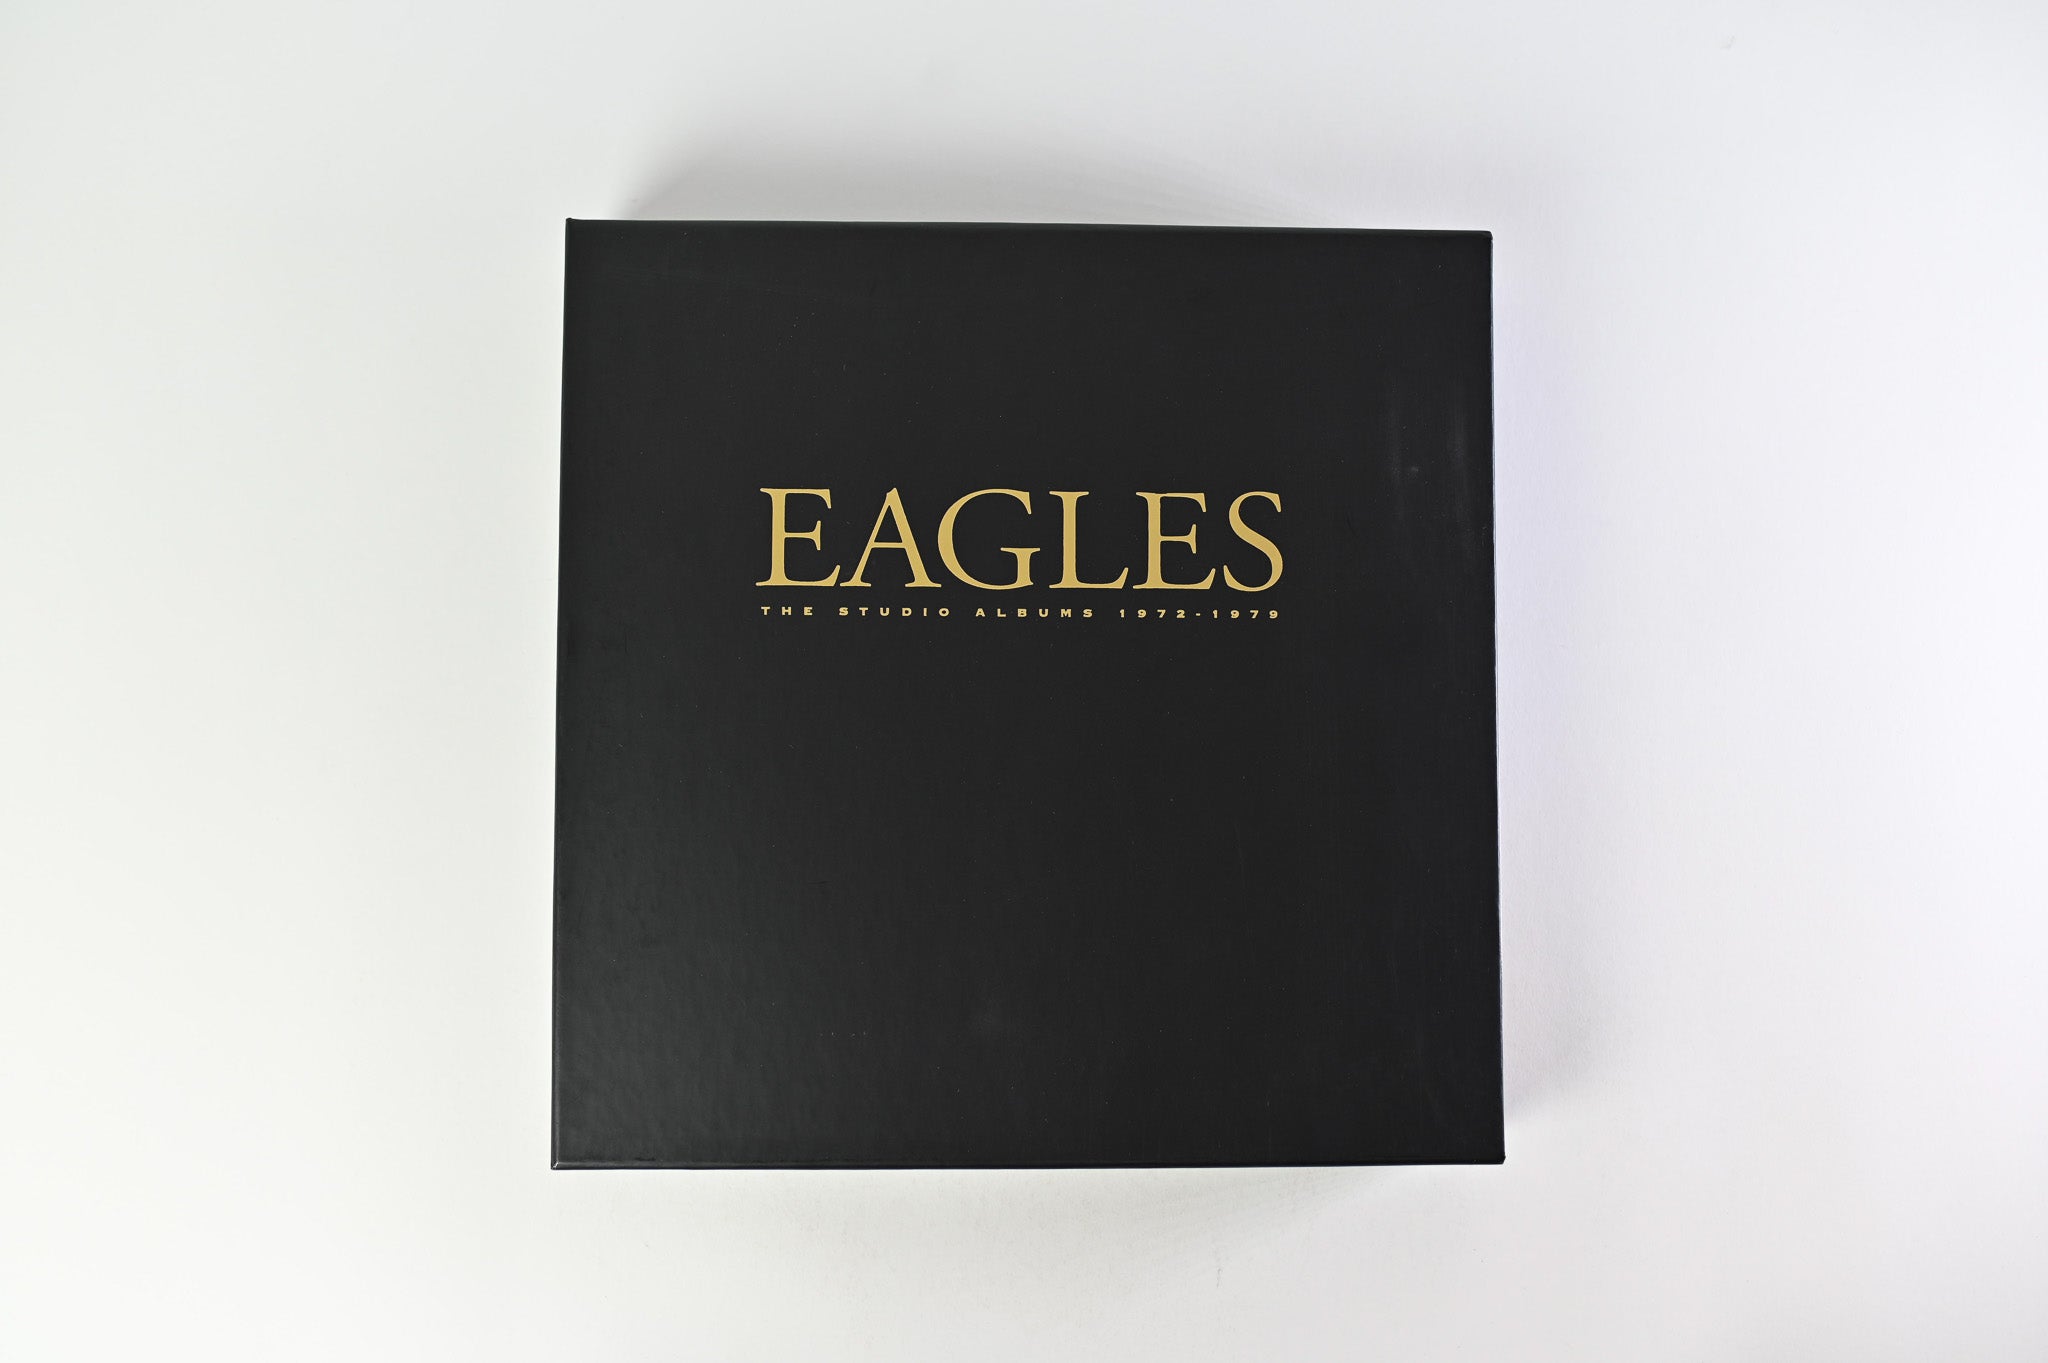 Eagles - The Studio Albums 1972-1979 on Rhino Ltd Numbered Box Set Reissue